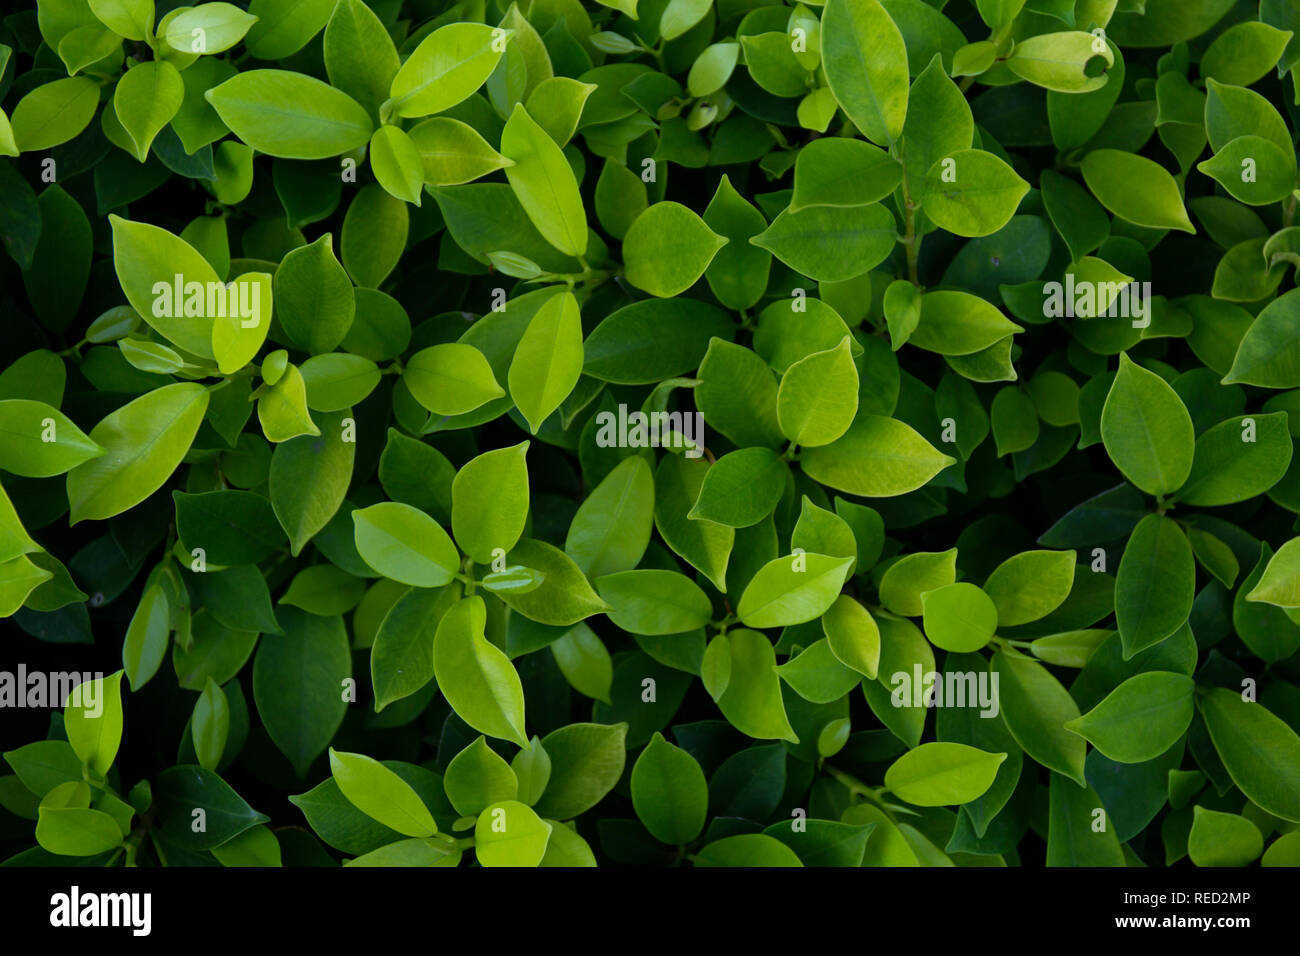 Tissu de fond vert. La texture des feuilles. Banque D'Images